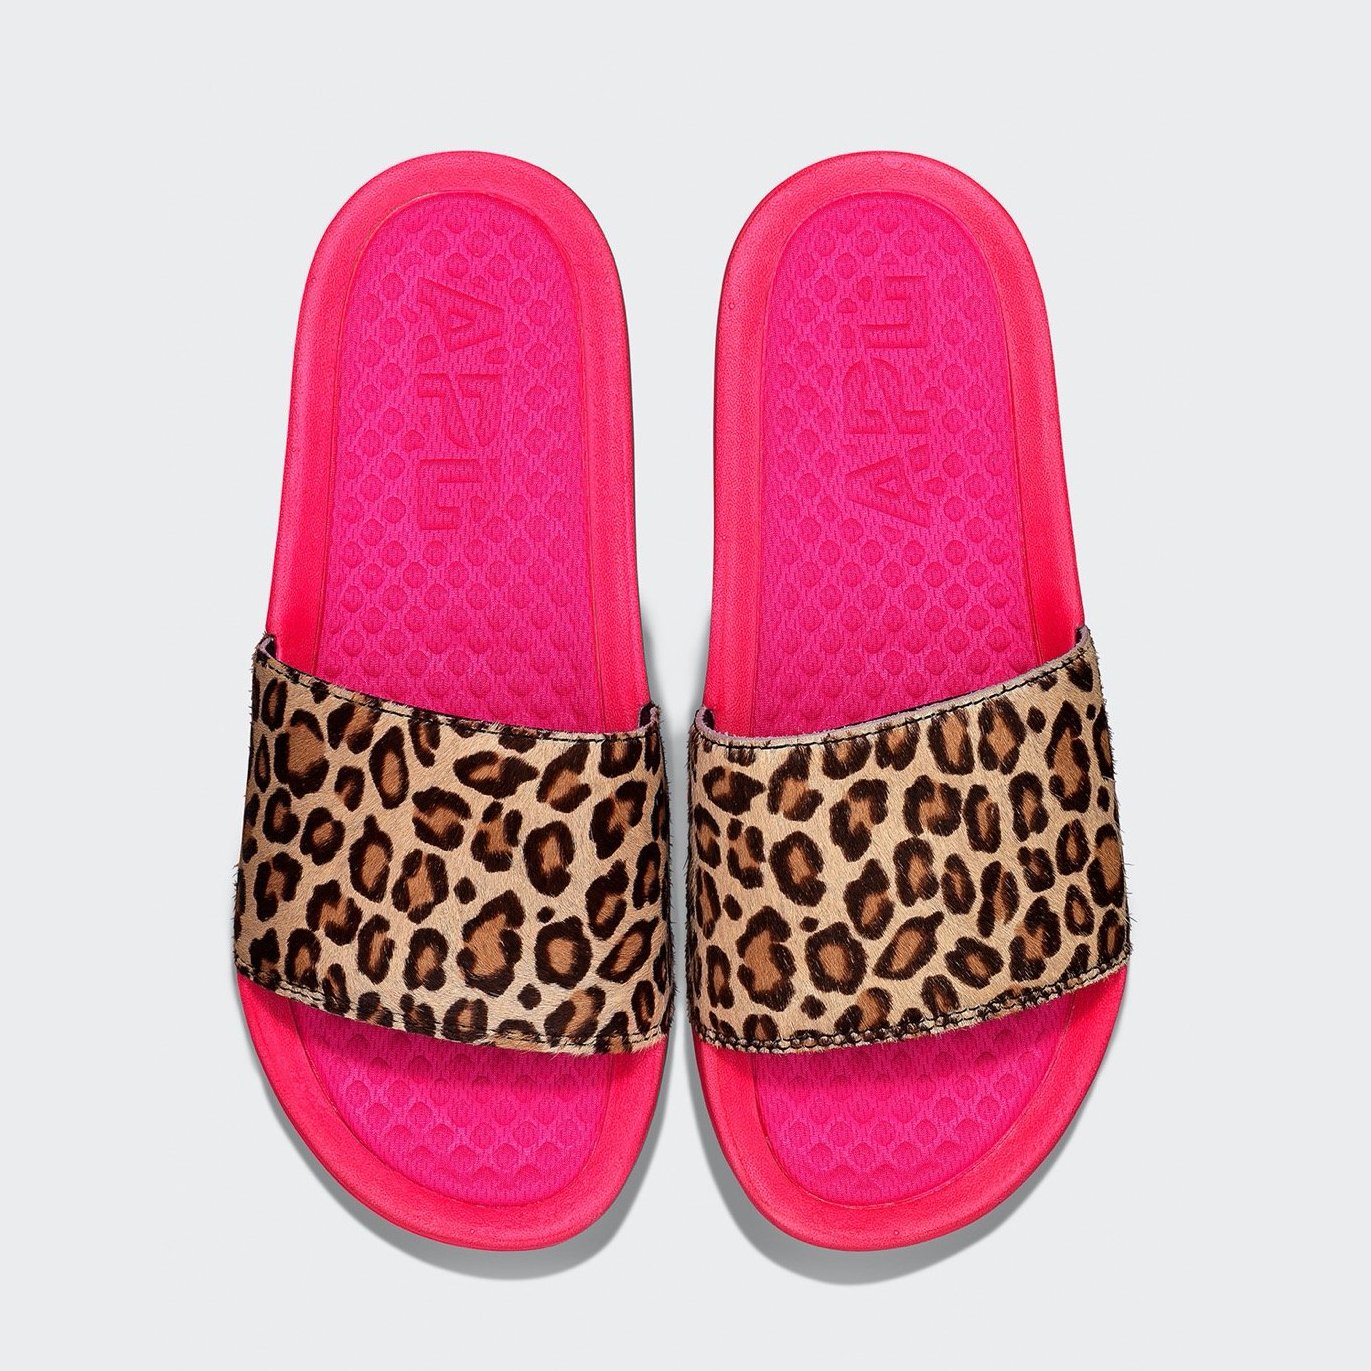 apl cheetah shoes